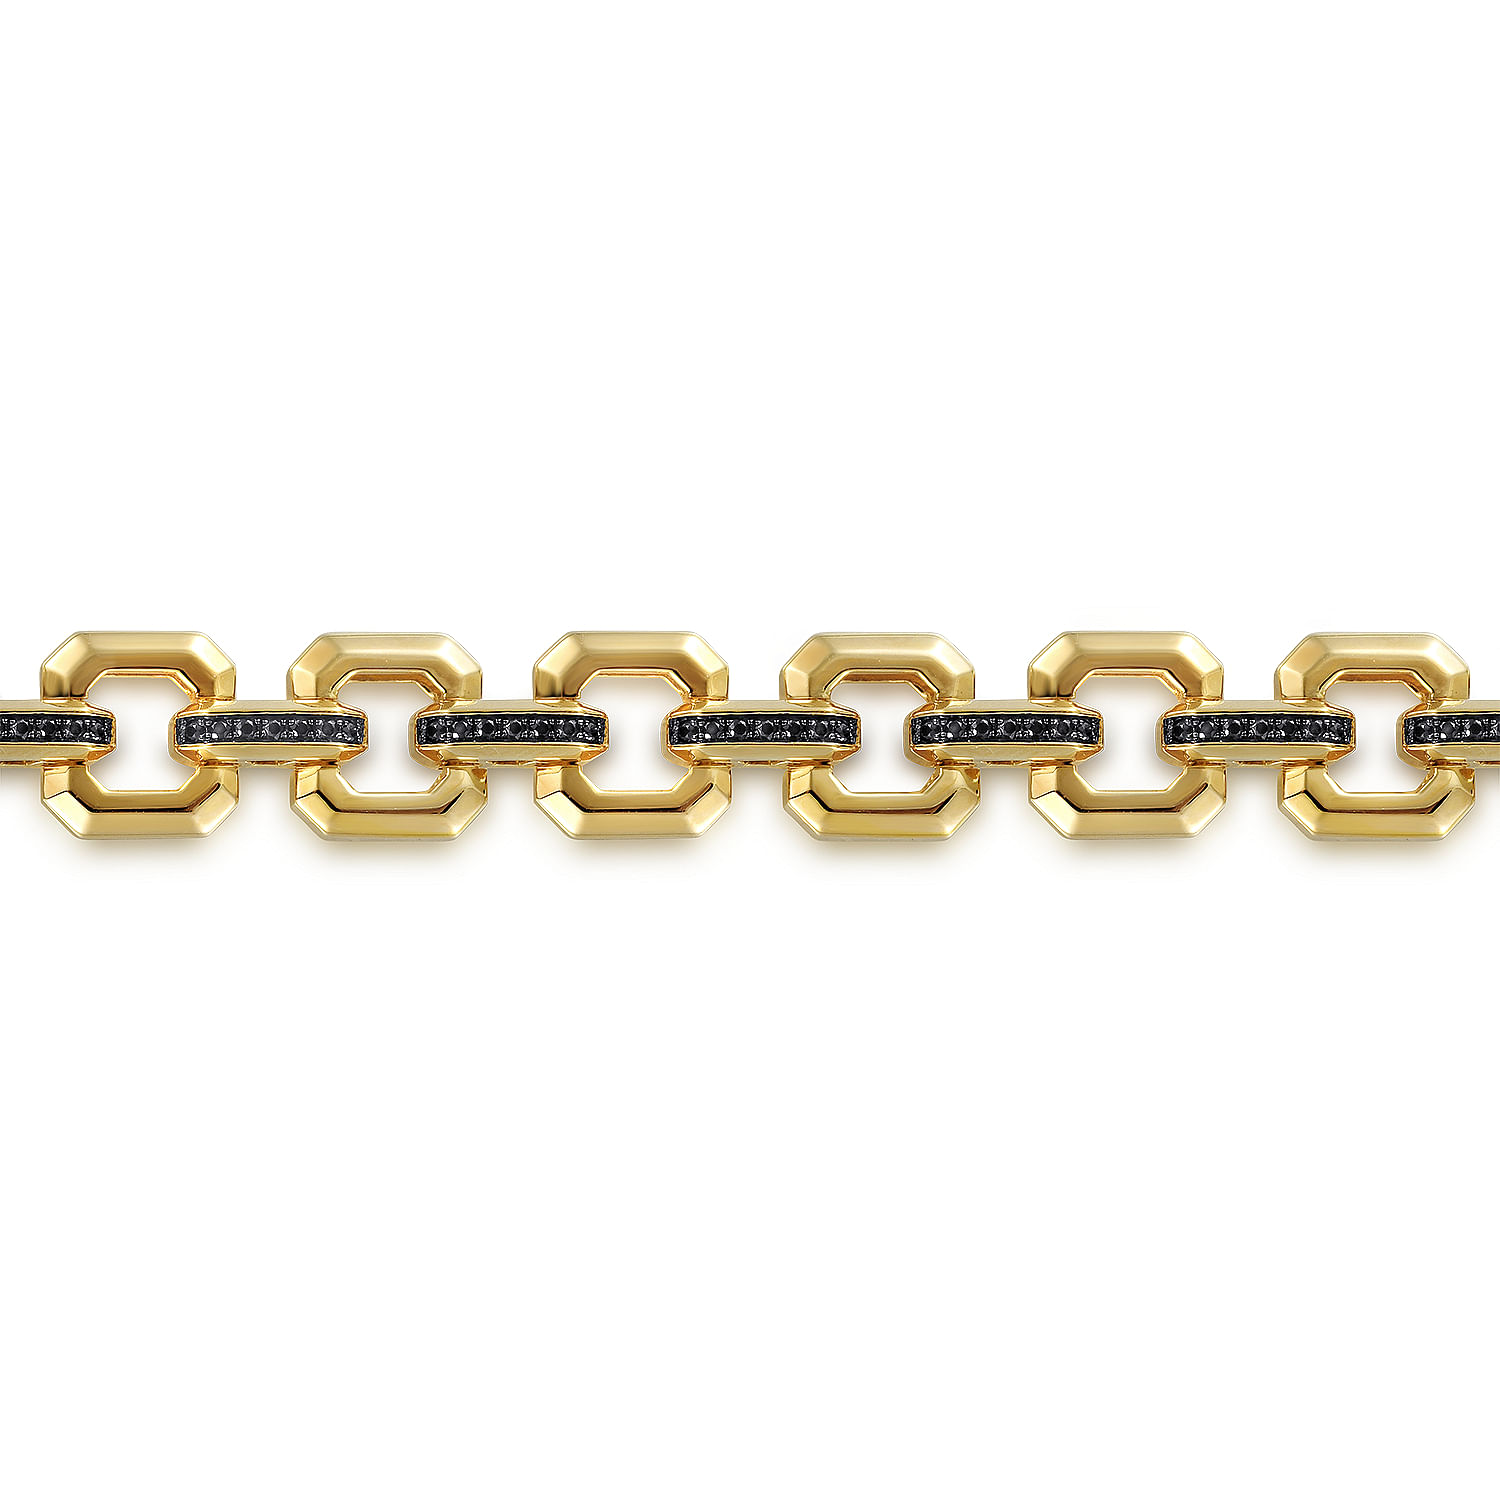 14k Yellow Gold Men's Link Chain Tennis Bracelet with Black Spinel Connectors
